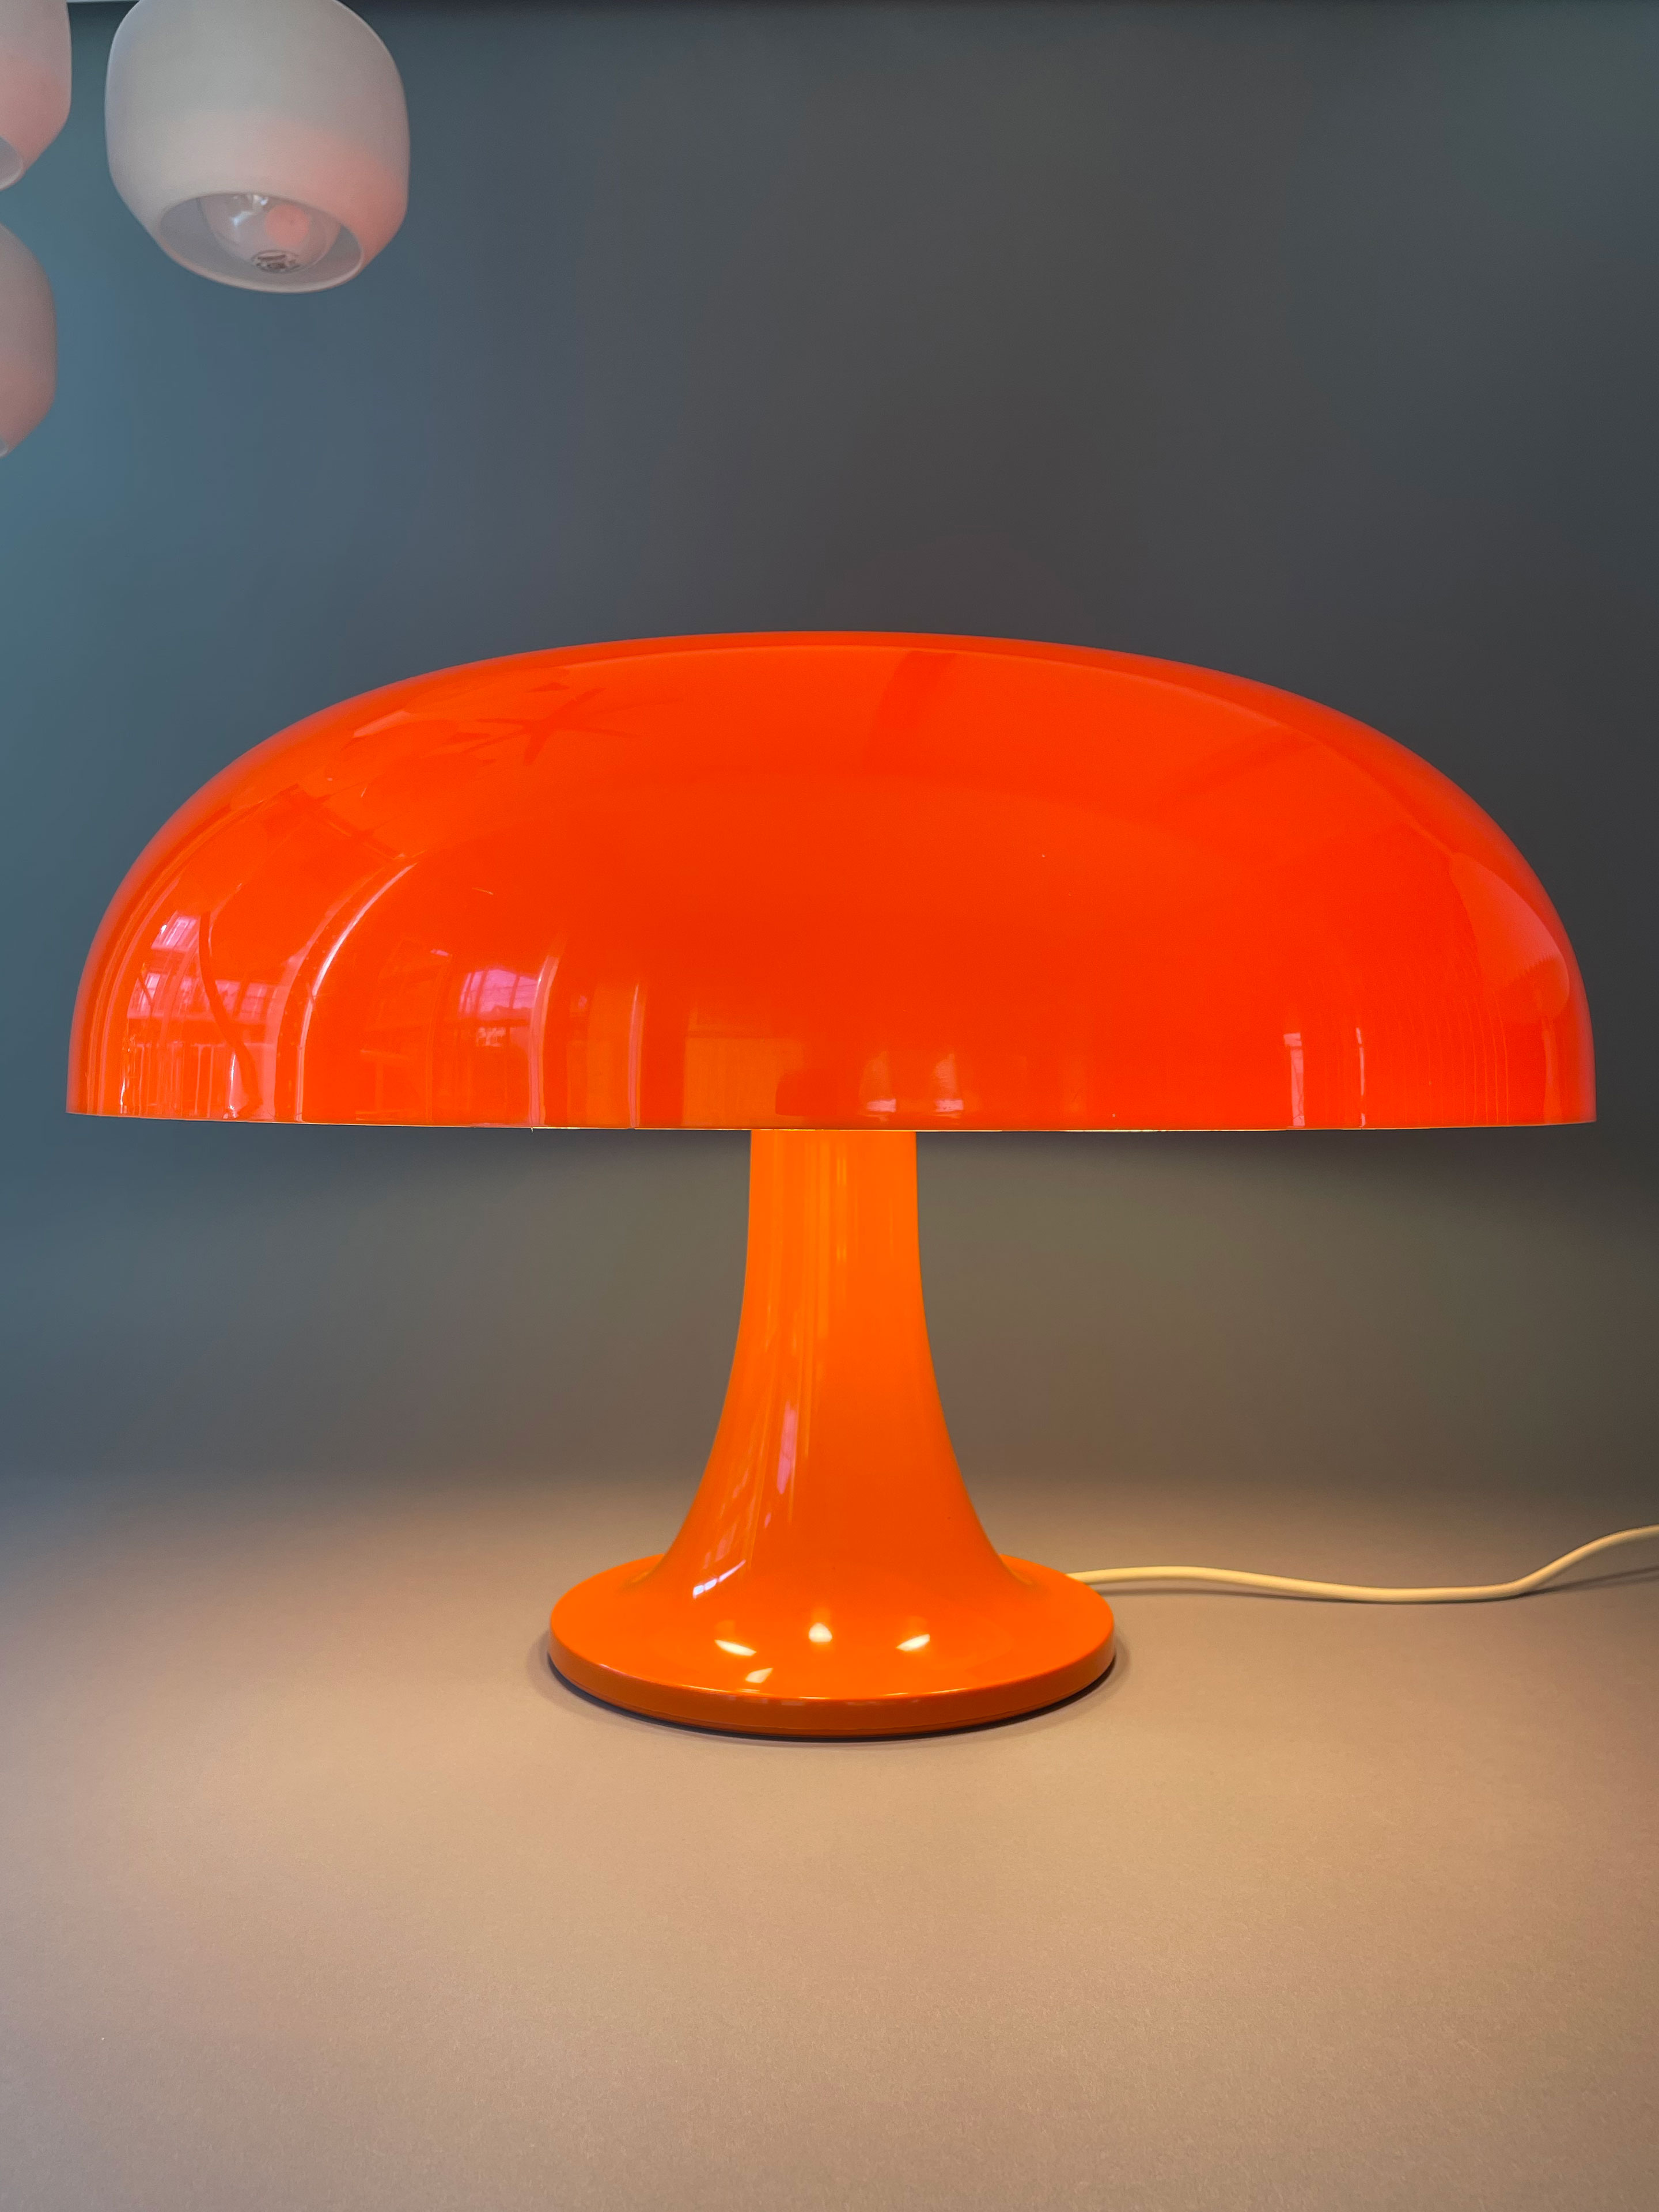 Nesso Lamp by Giancarlo Mattioli for Artemide, Italy, 1960s. For sale at heyday möbel, Grubenstrasse 19, 8045 Zürich, Switzerland. Mid-Century Modern Furniture and Other Stuff.